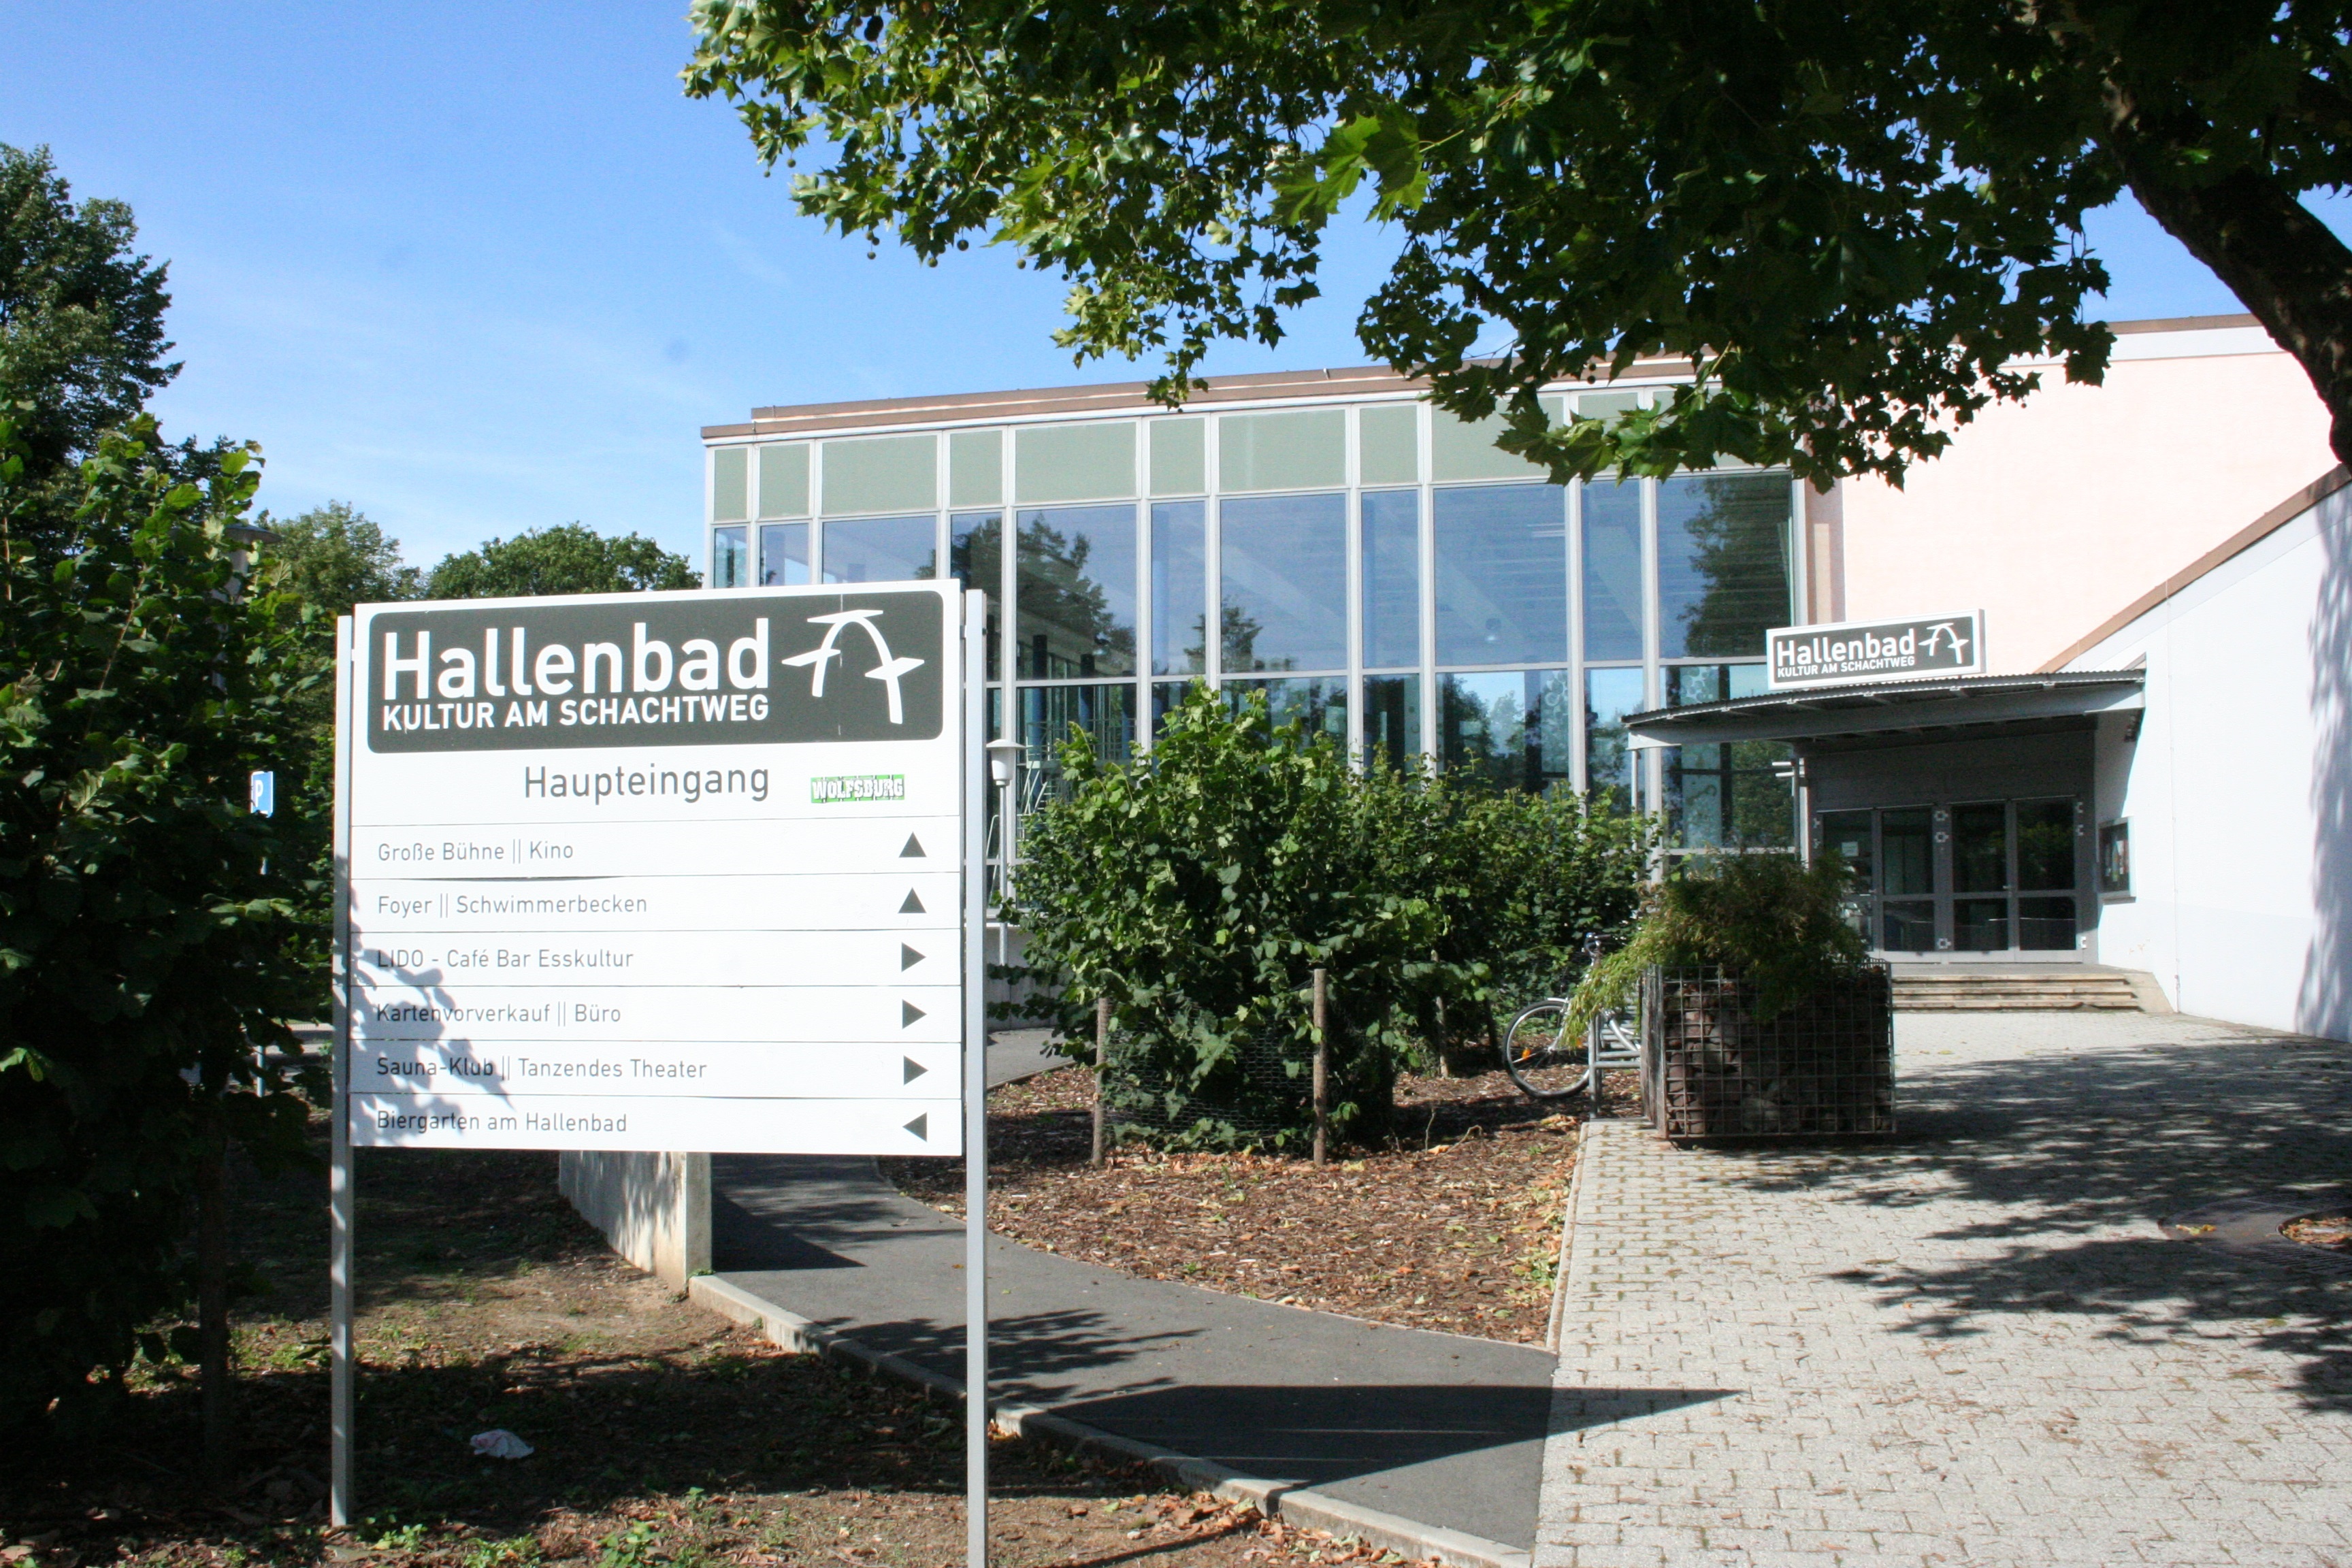 Hallenbad Kultur am Schachtweg